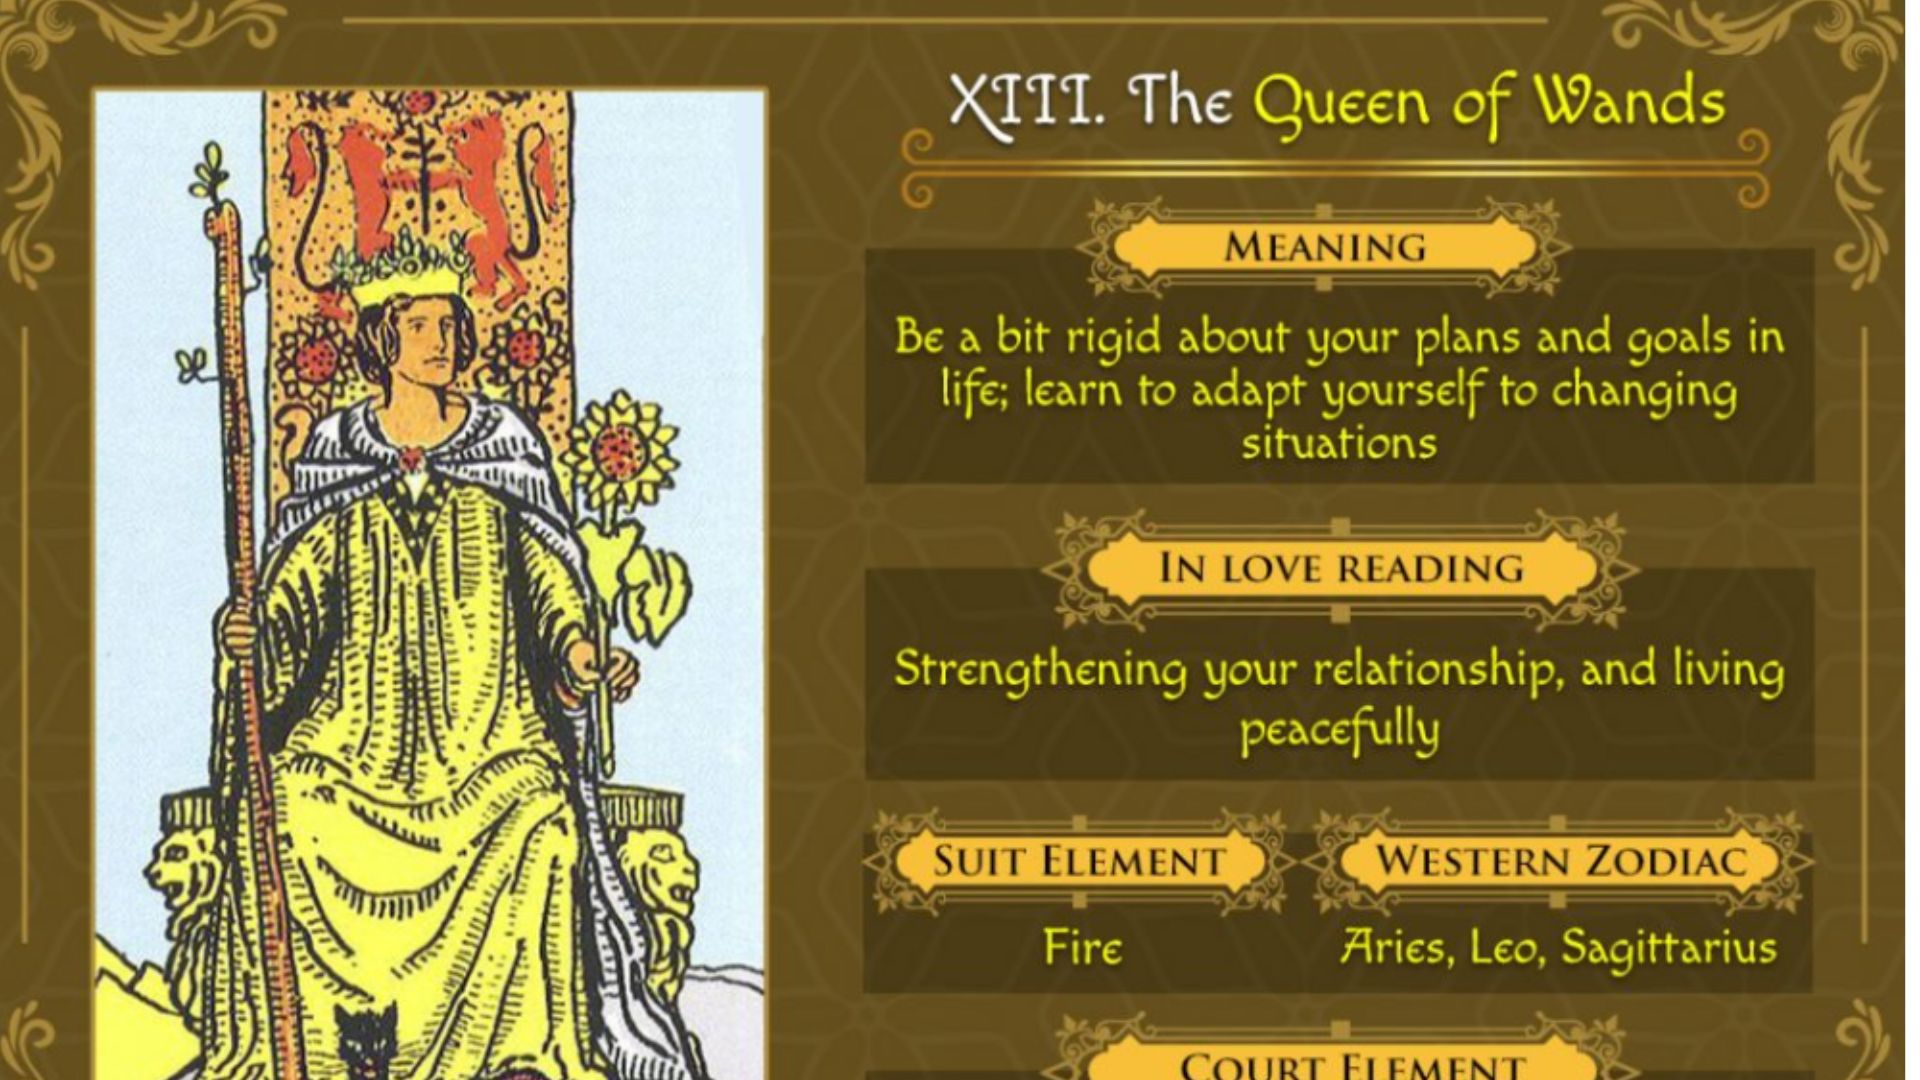 Queen Of Wands - How To Interpret Her In A Tarot Reading?